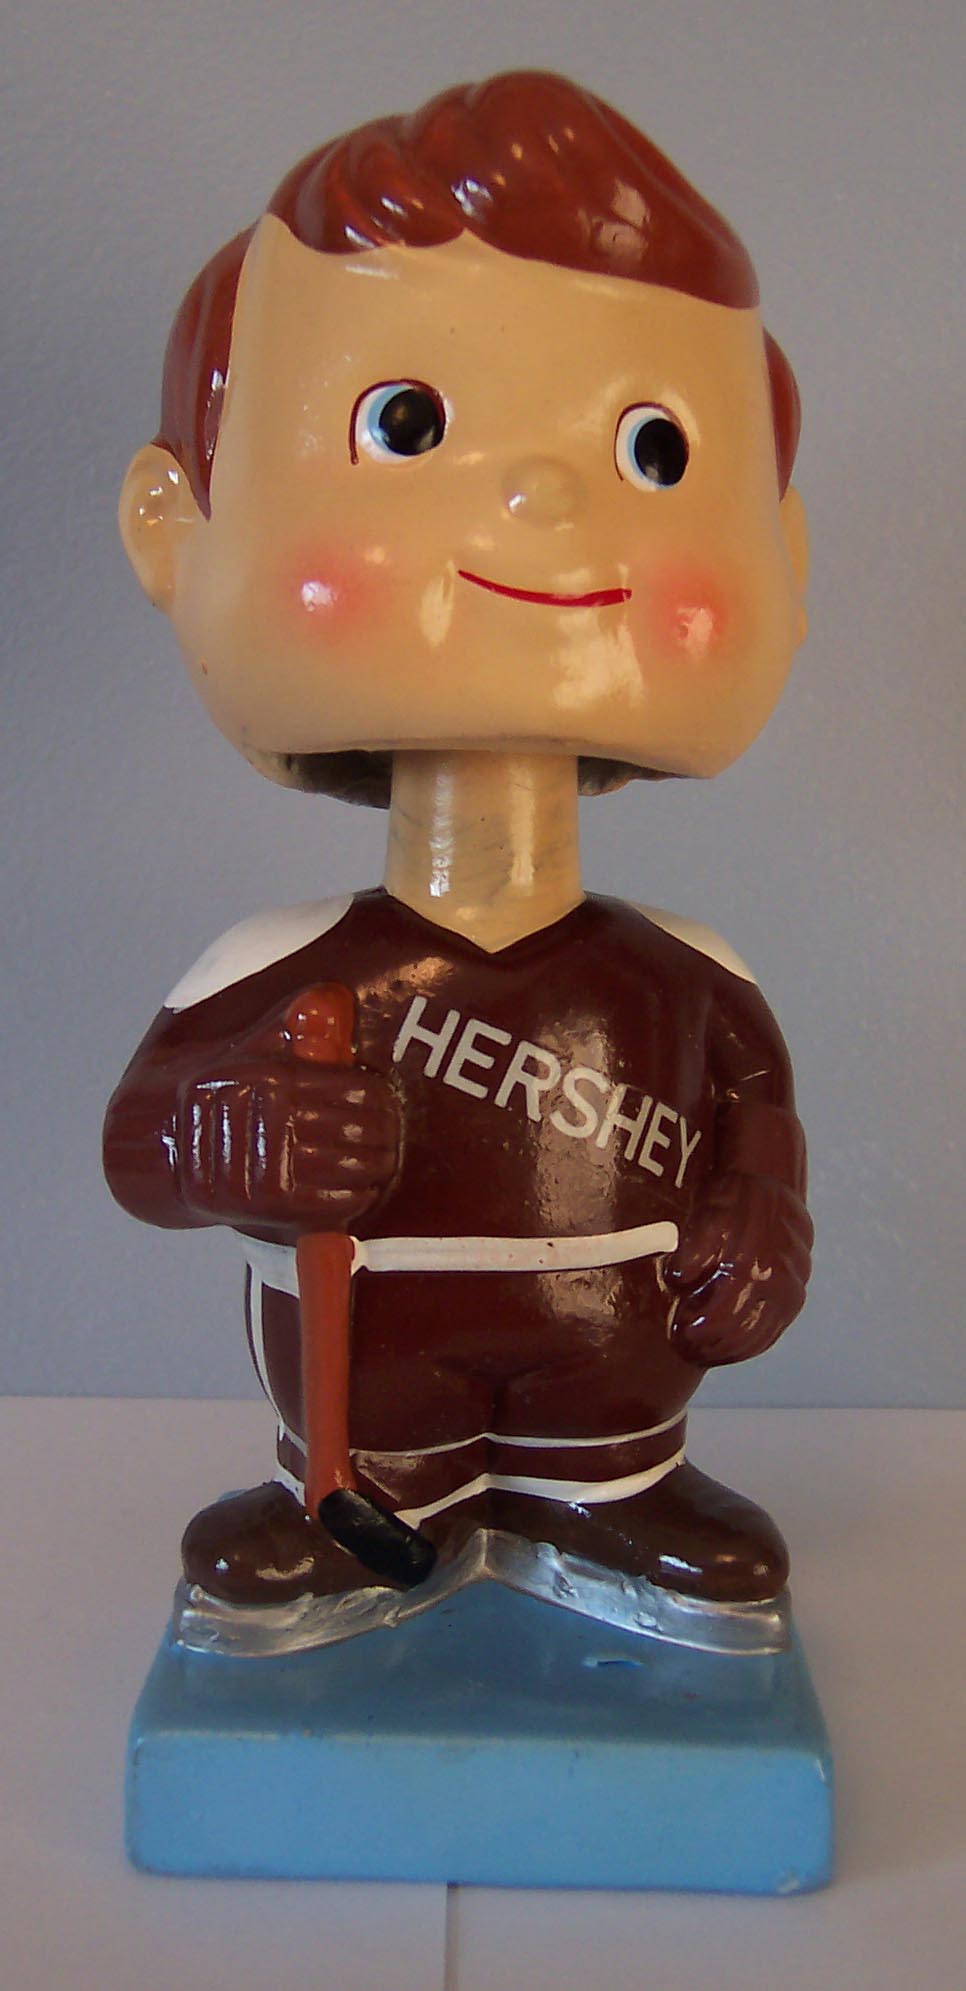 Hershey Bears doll